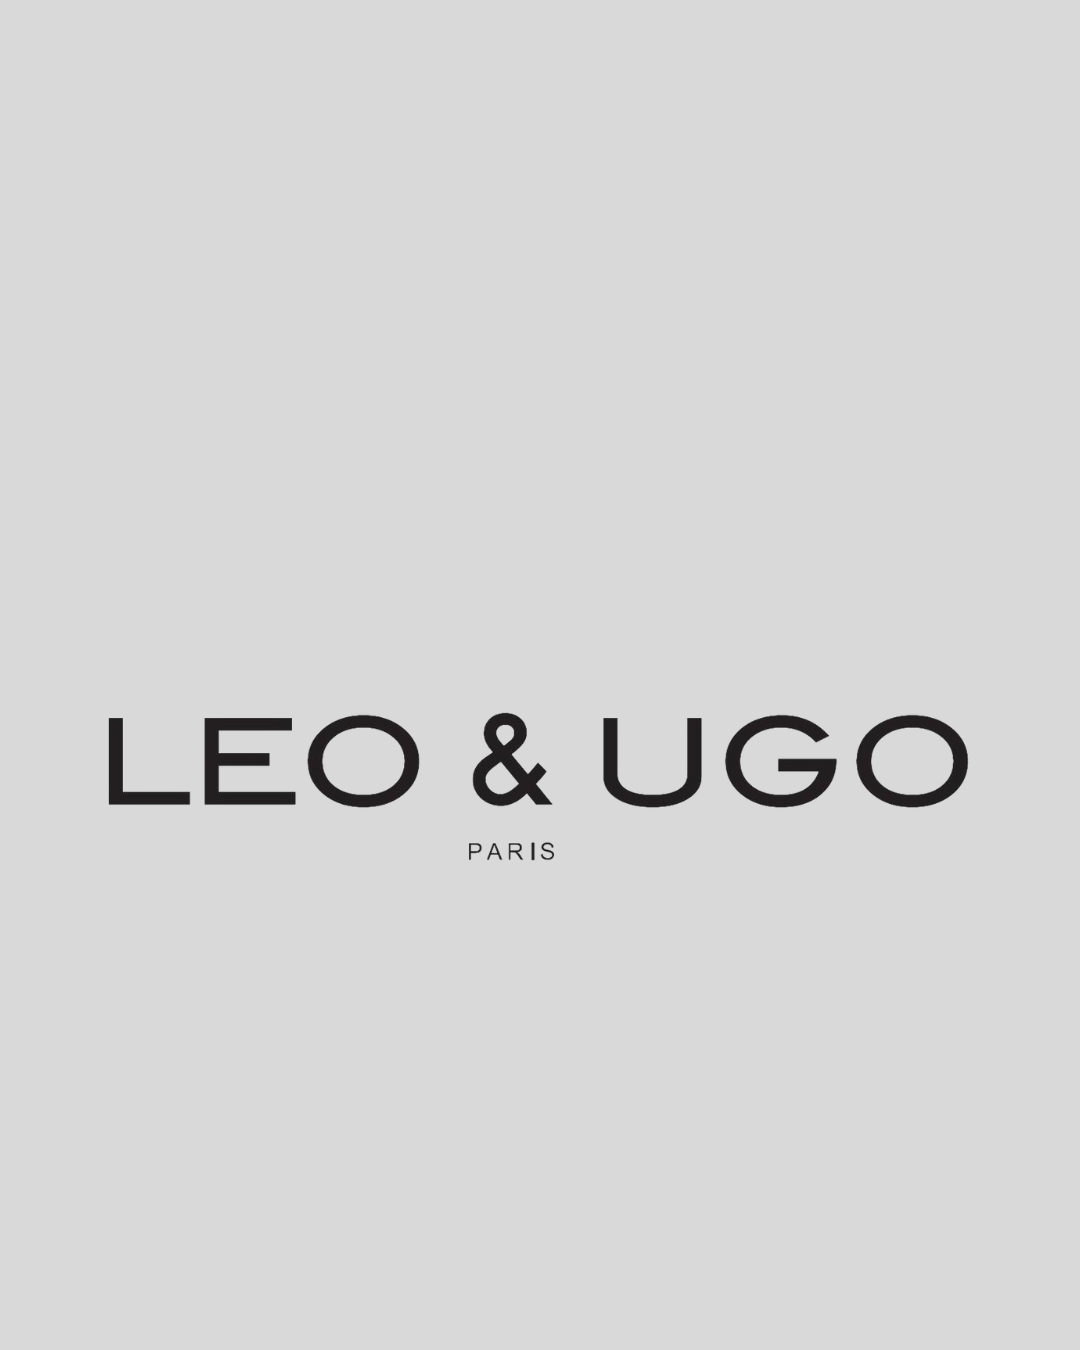 Leo & ugo